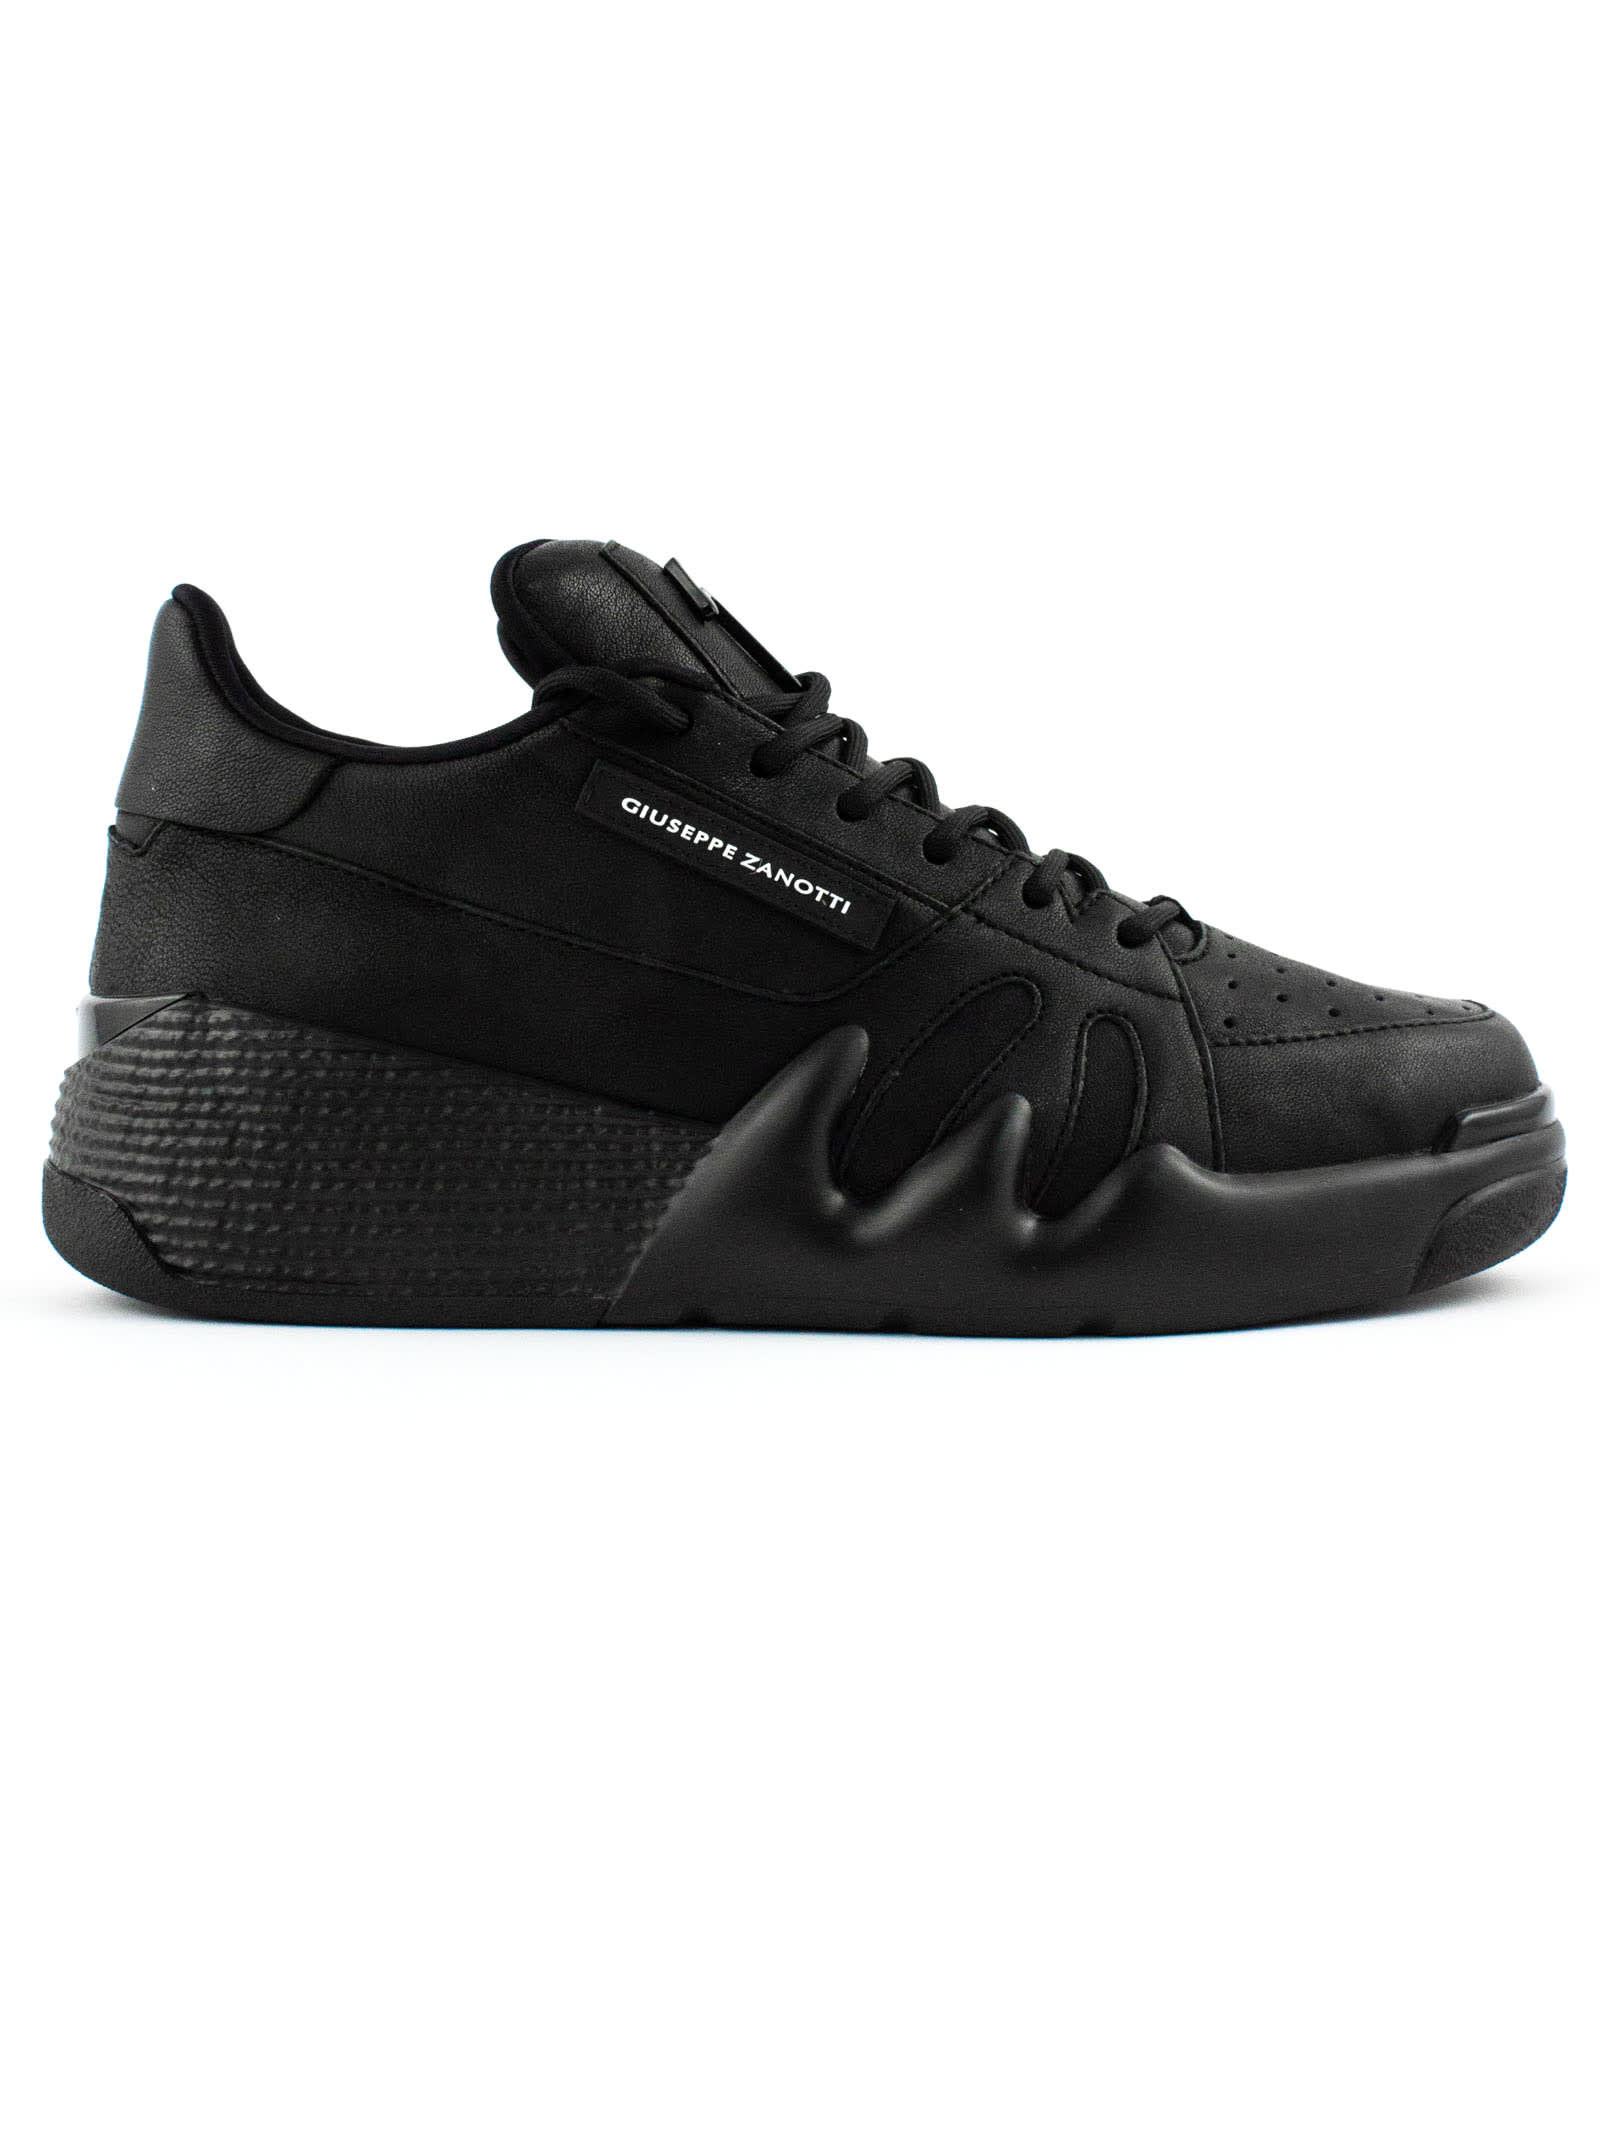 Giuseppe Zanotti Talon Black Leather Sneakers